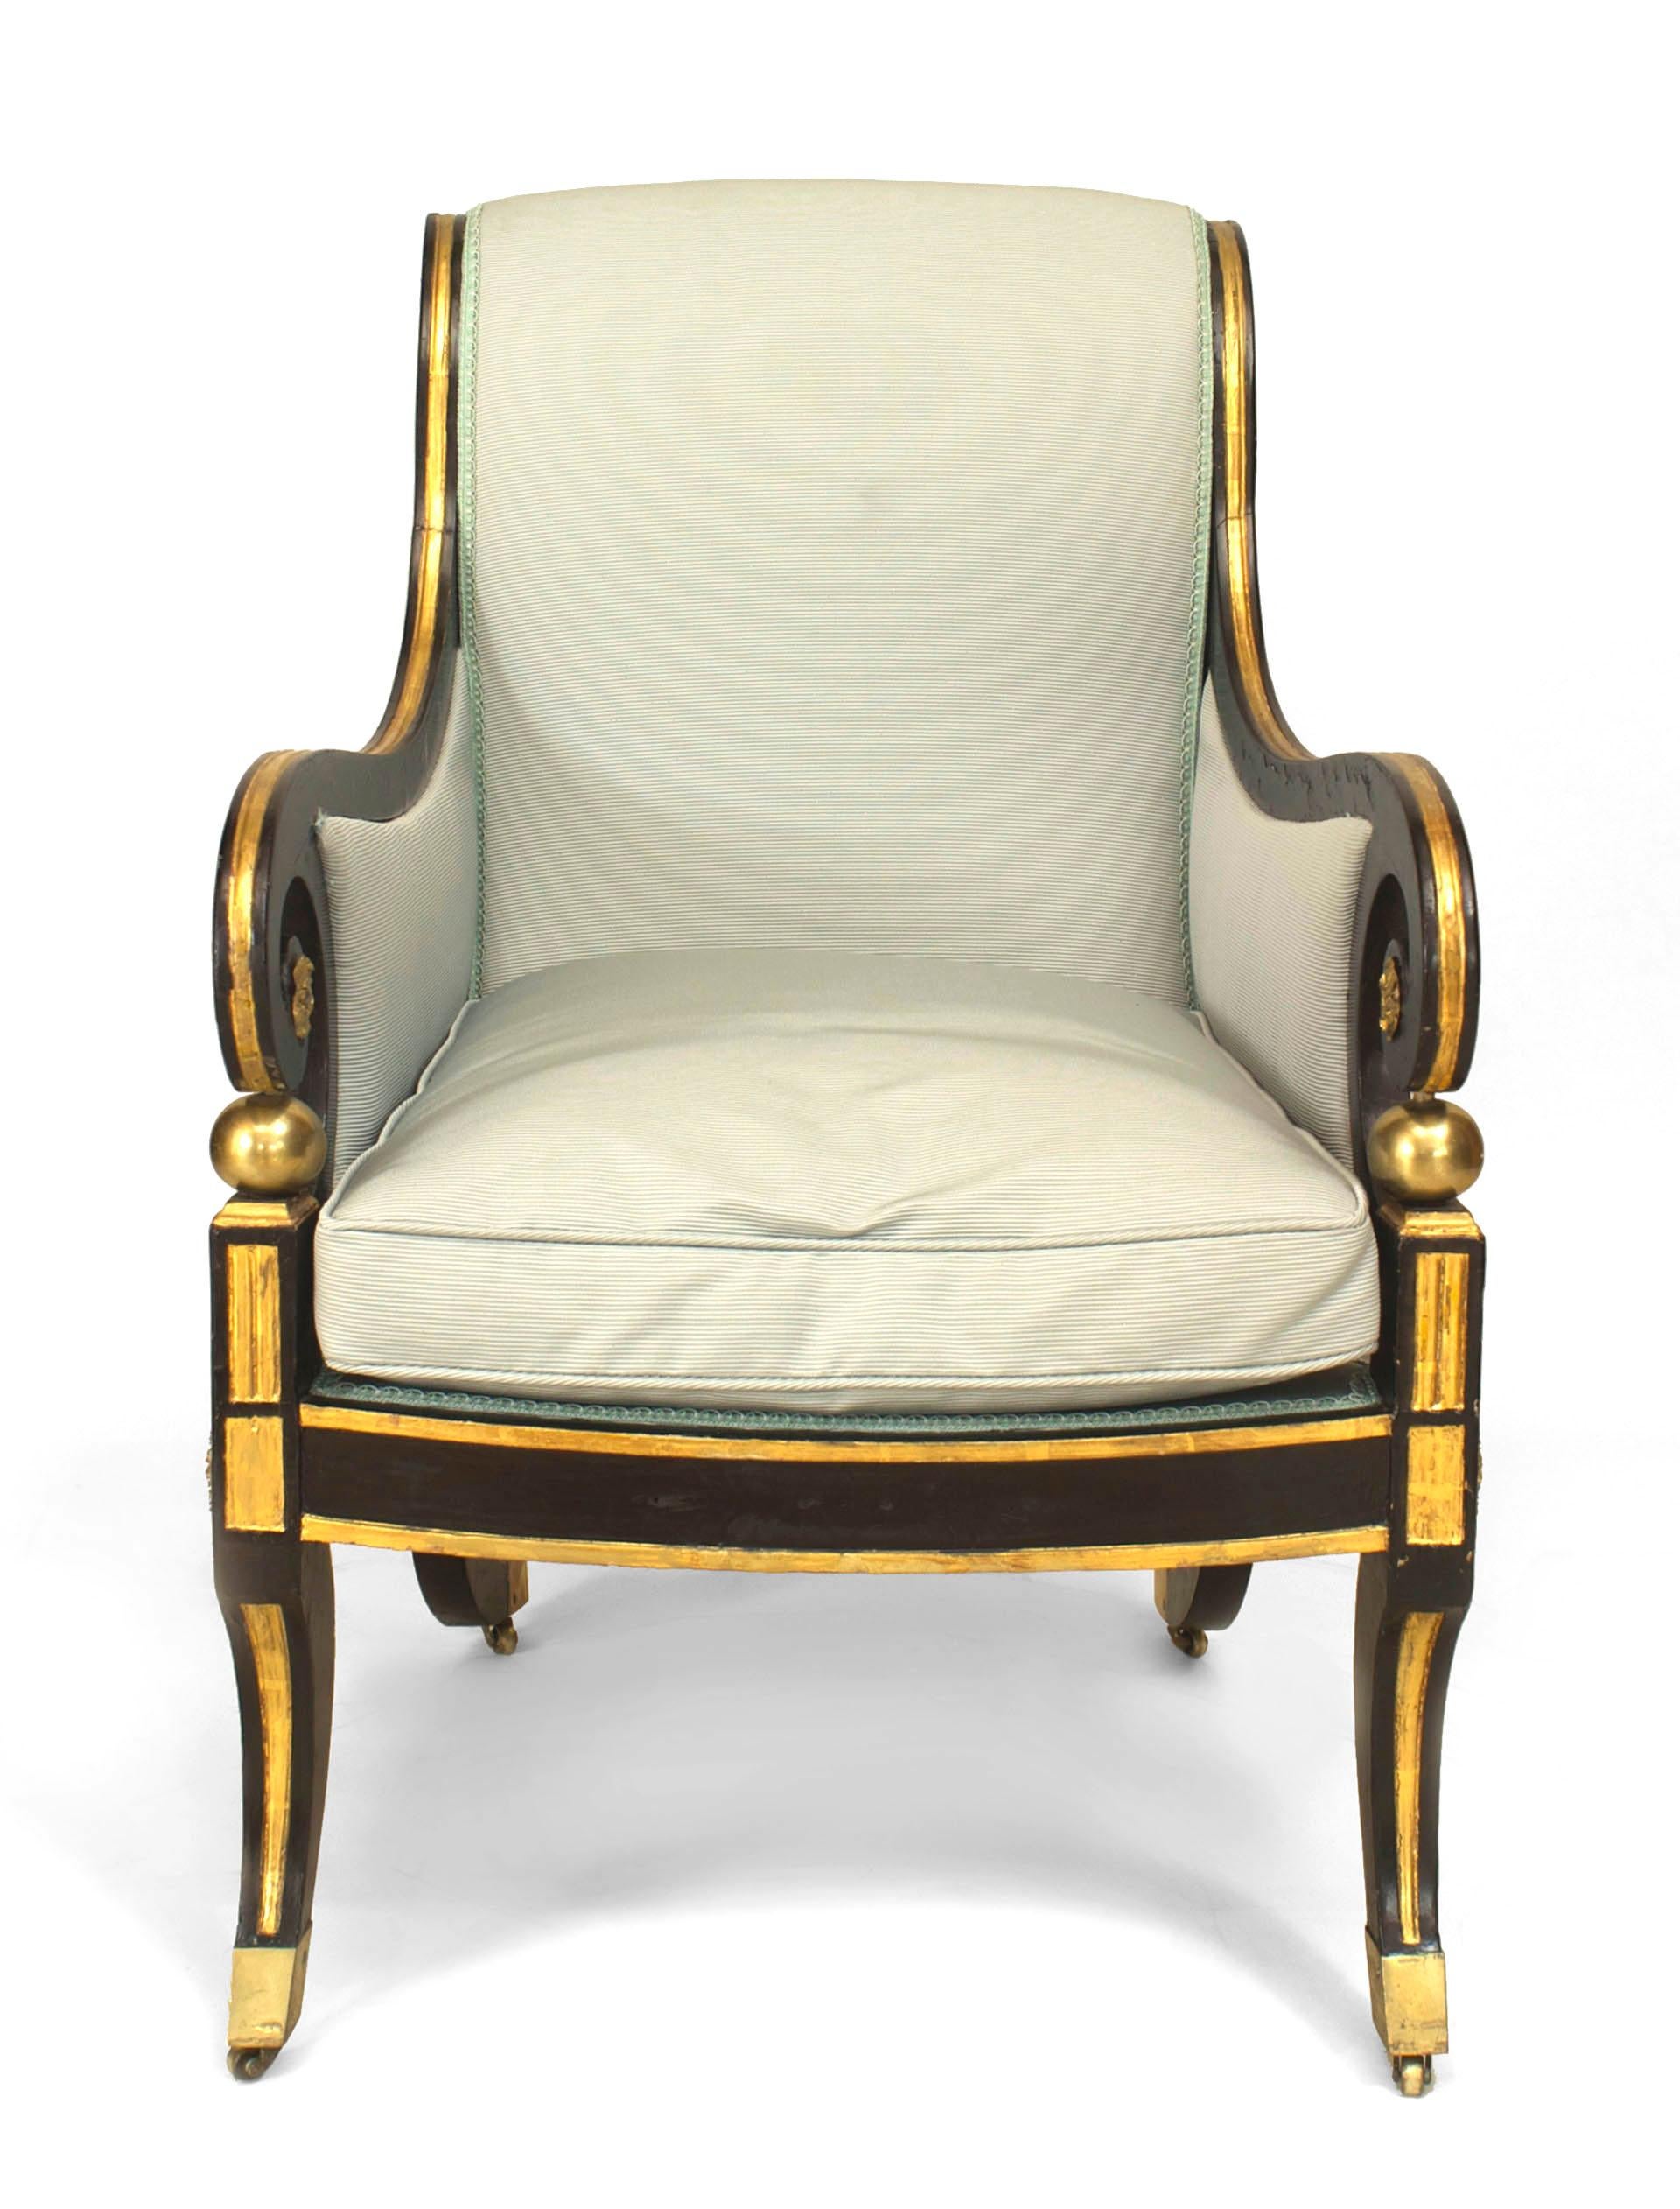 British Early 19th c. English Regency Club Chair - 1stdibs New York